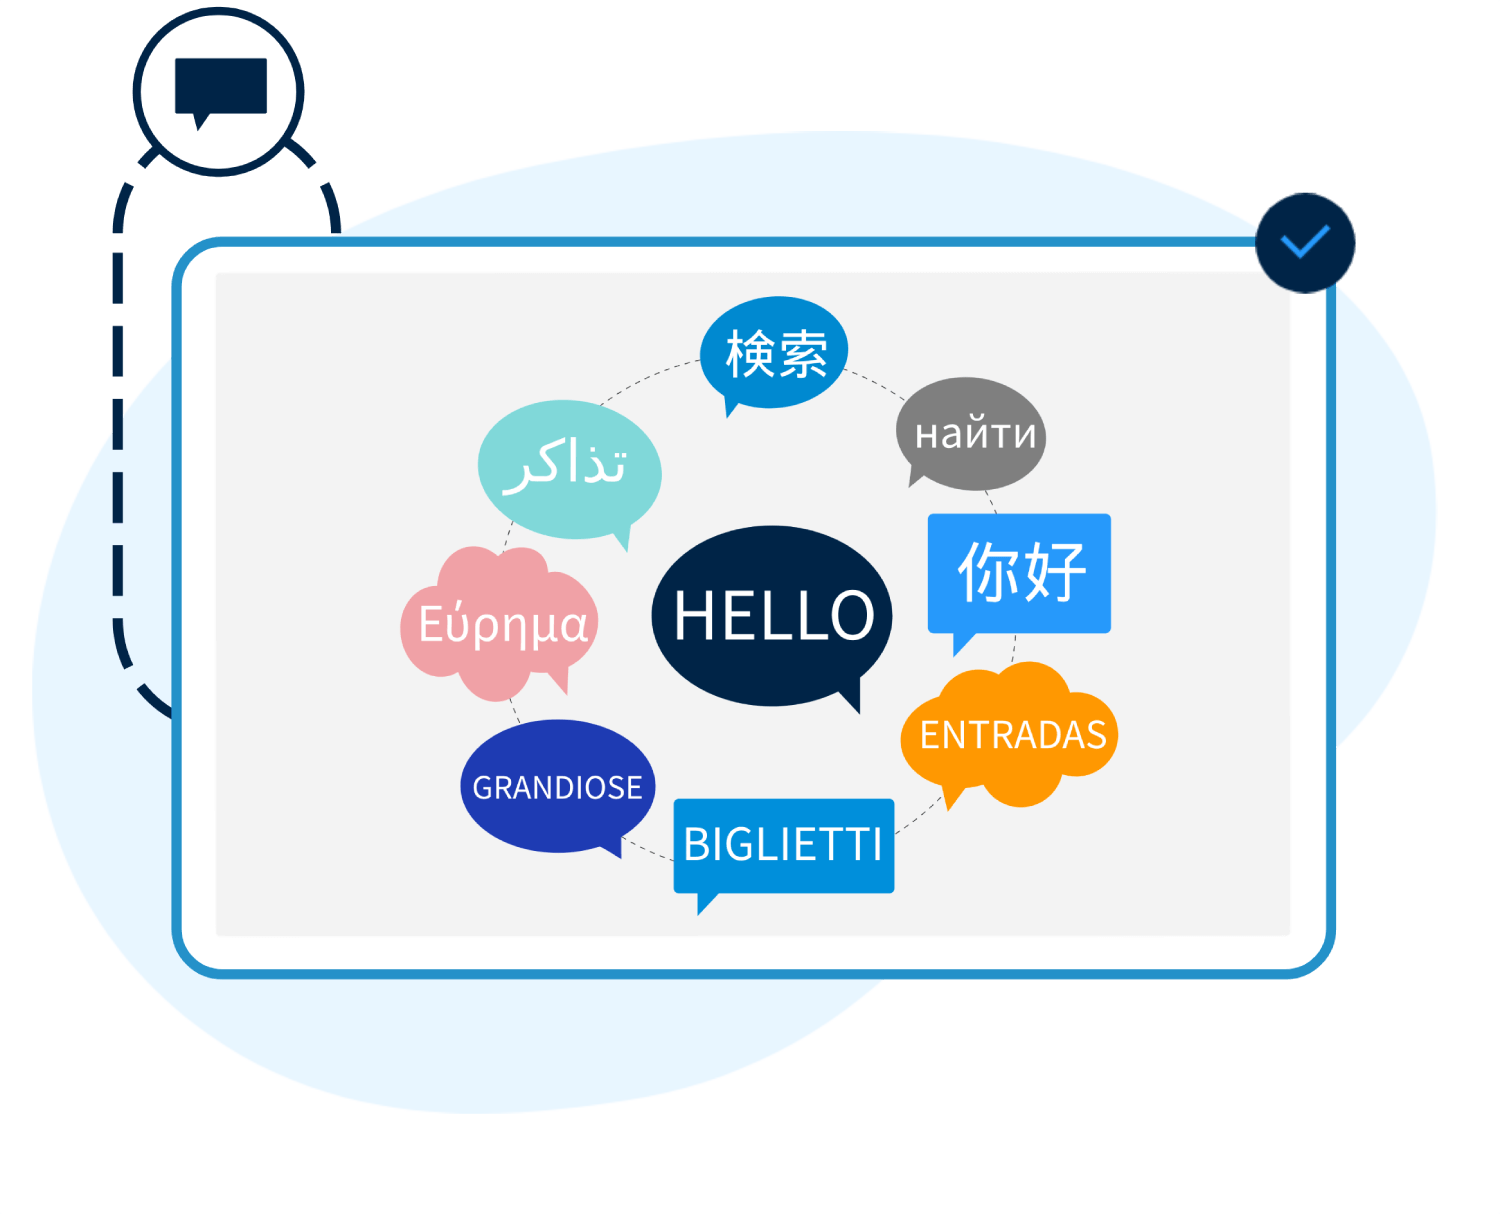 Multi languages networking app